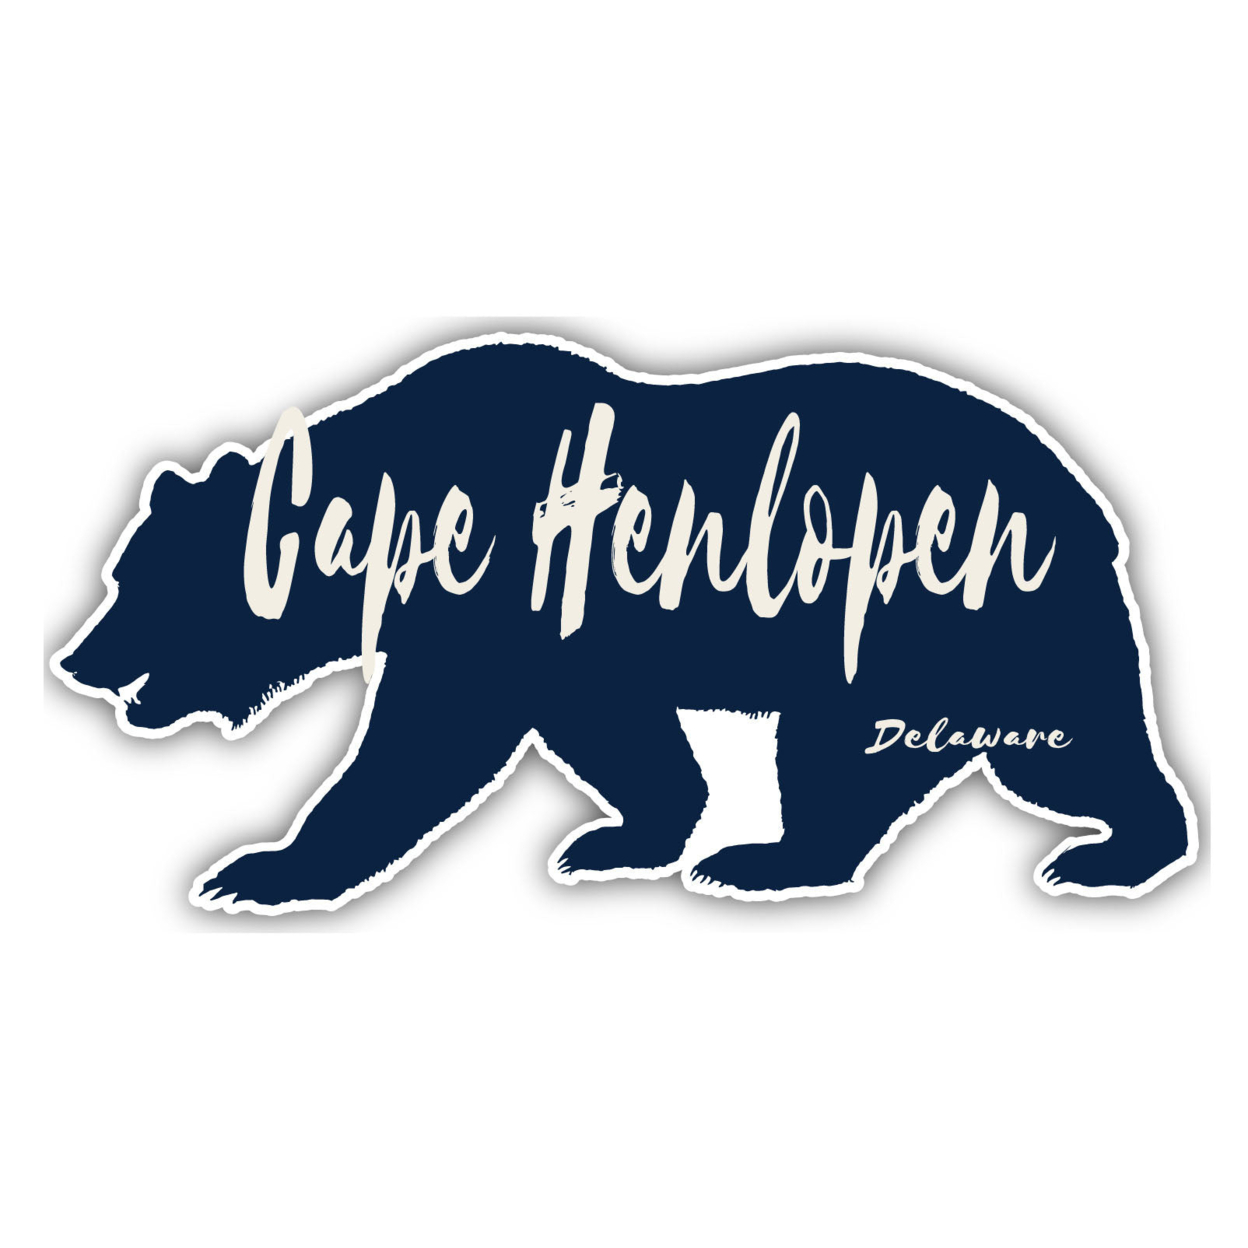 Cape Henlopen Delaware Souvenir Decorative Stickers (Choose Theme And Size) - 4-Pack, 6-Inch, Bear